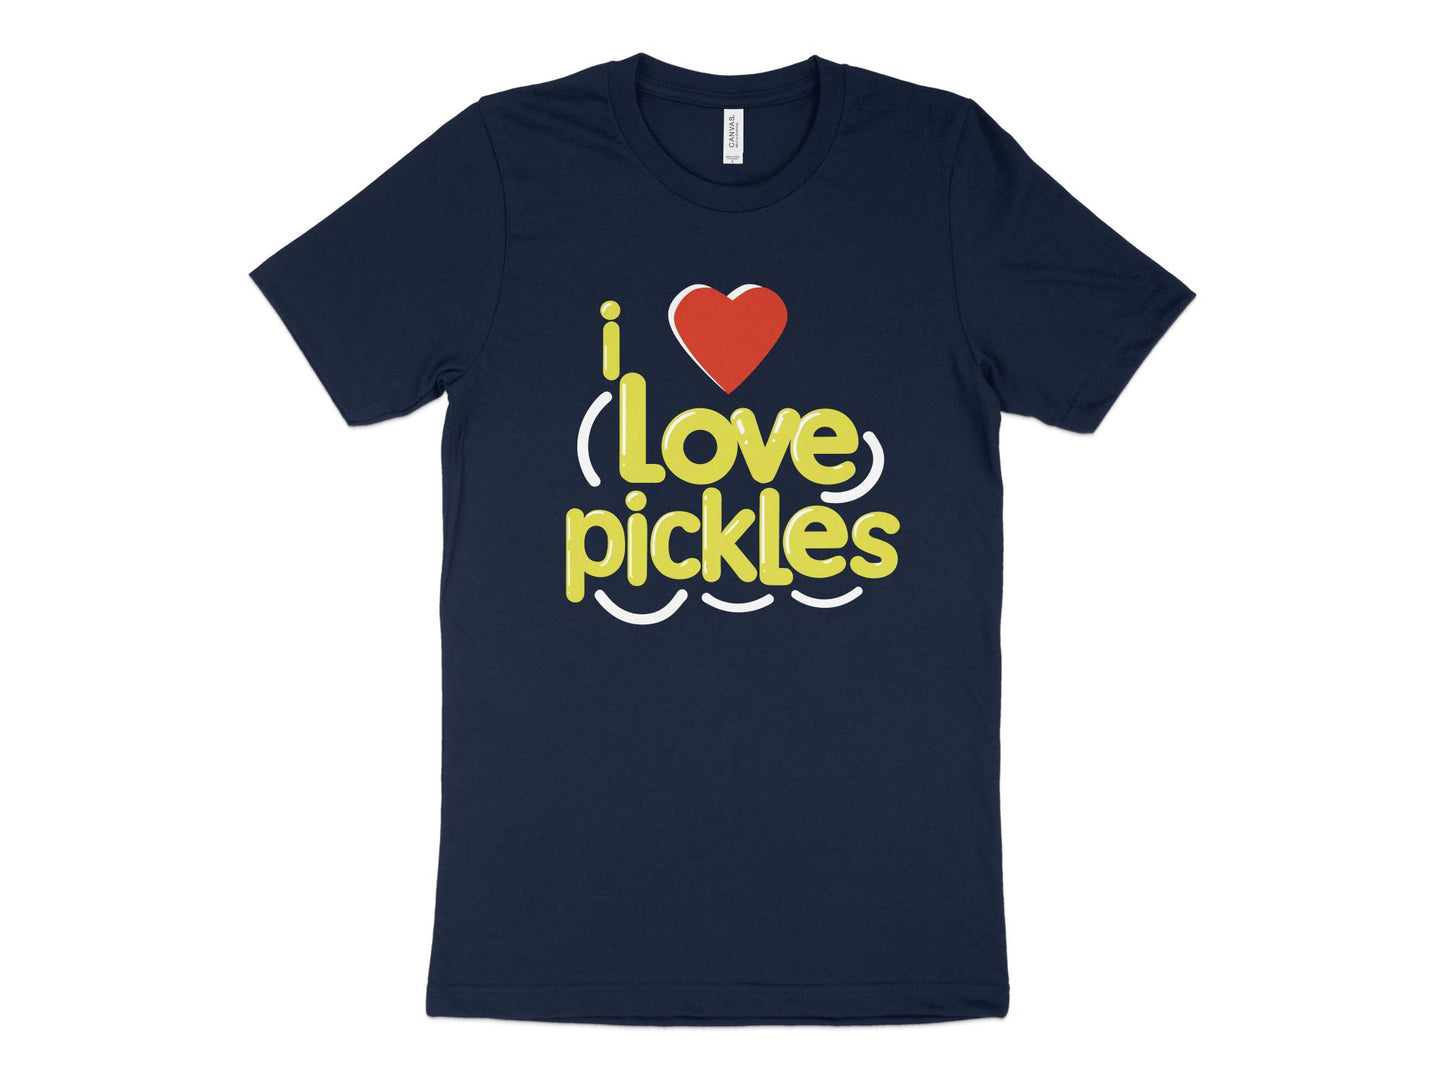 I Love Pickles Shirt, navy blue